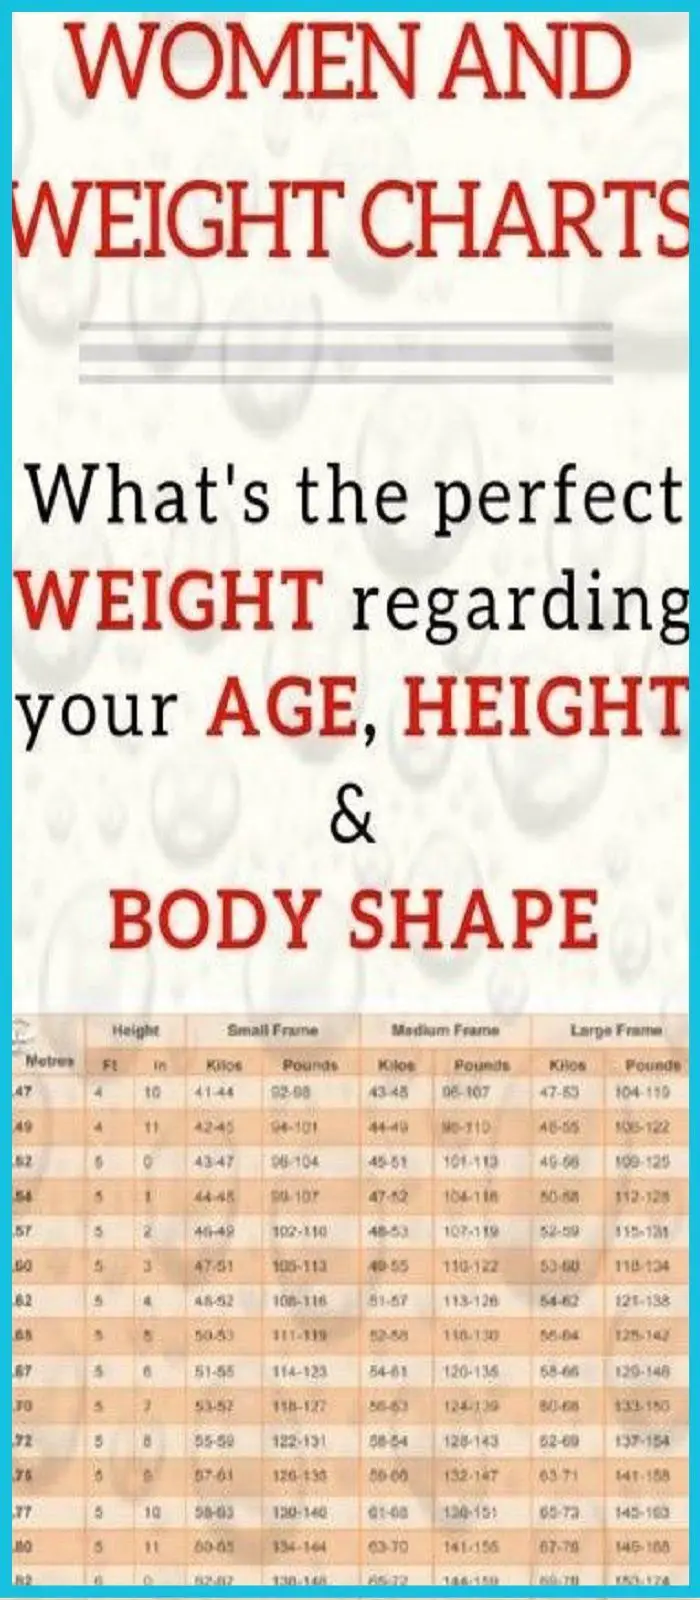 Average Body Weight For Women